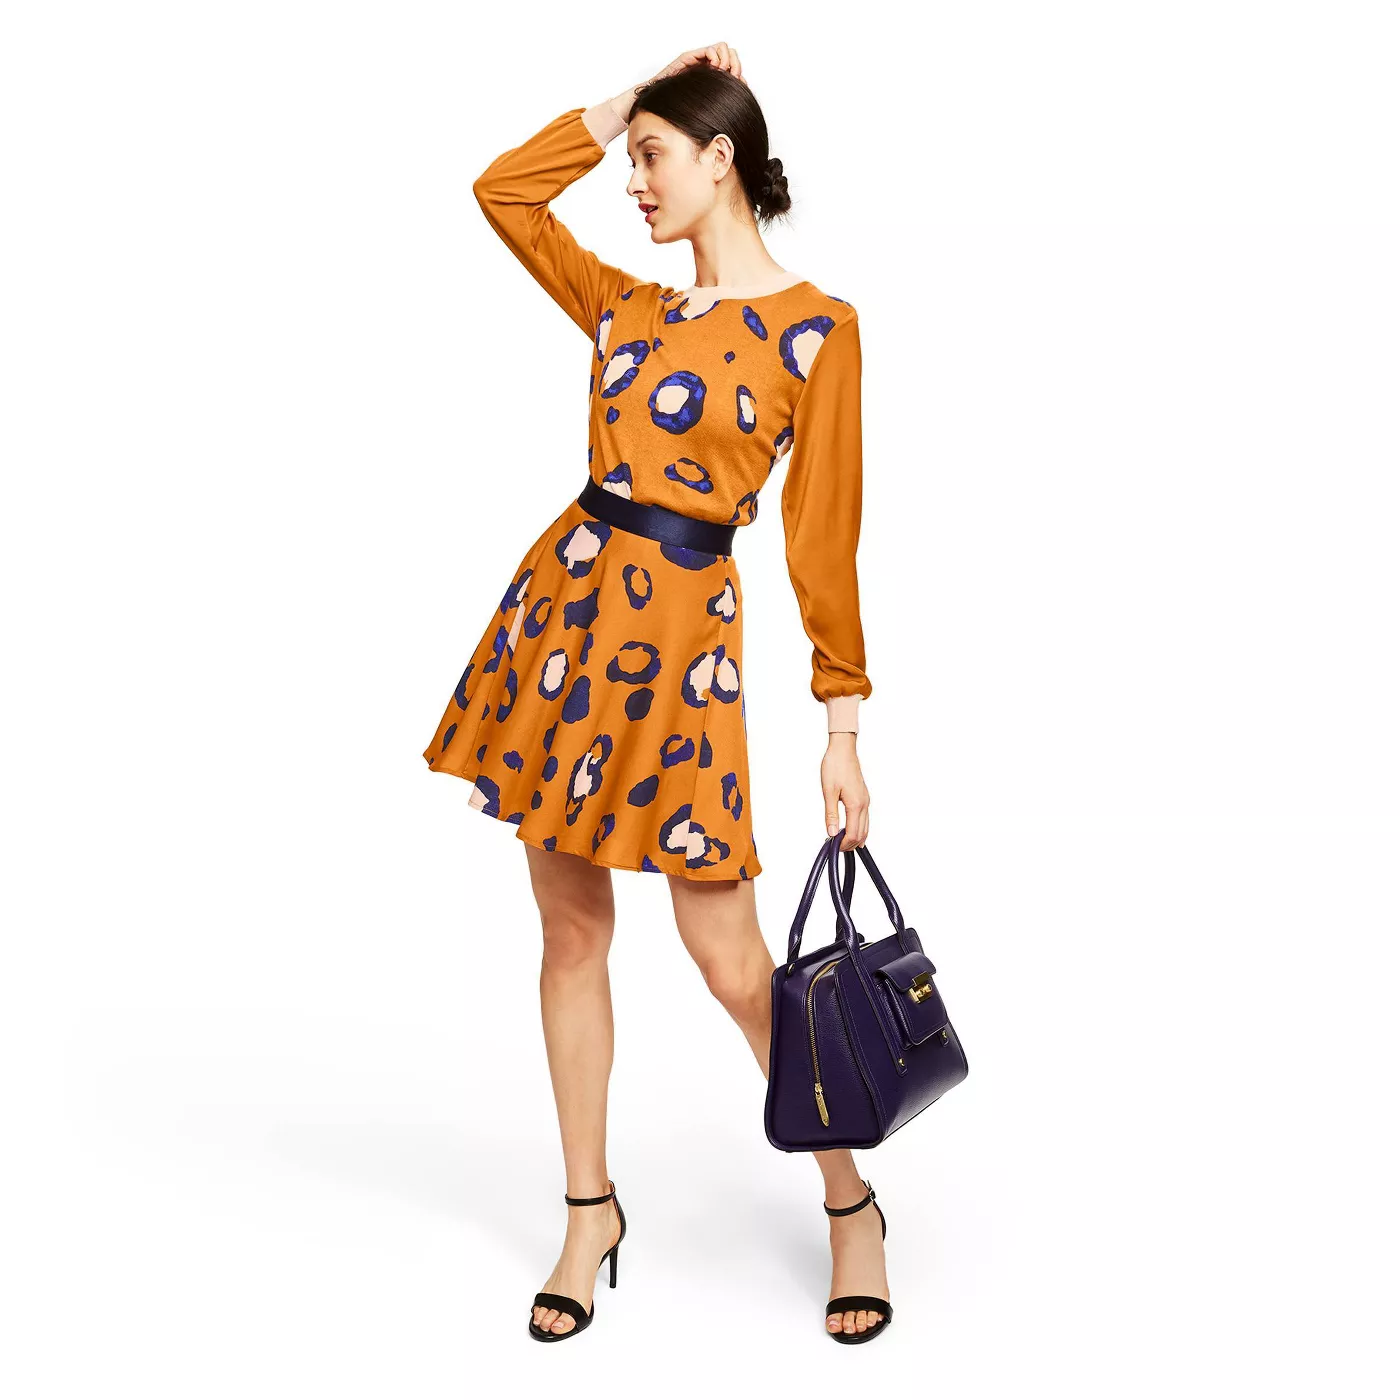 Women's Leopard Print A-Line Mini Skirt - 3.1 Phillip Lim for Target Orange - image 1 of 4